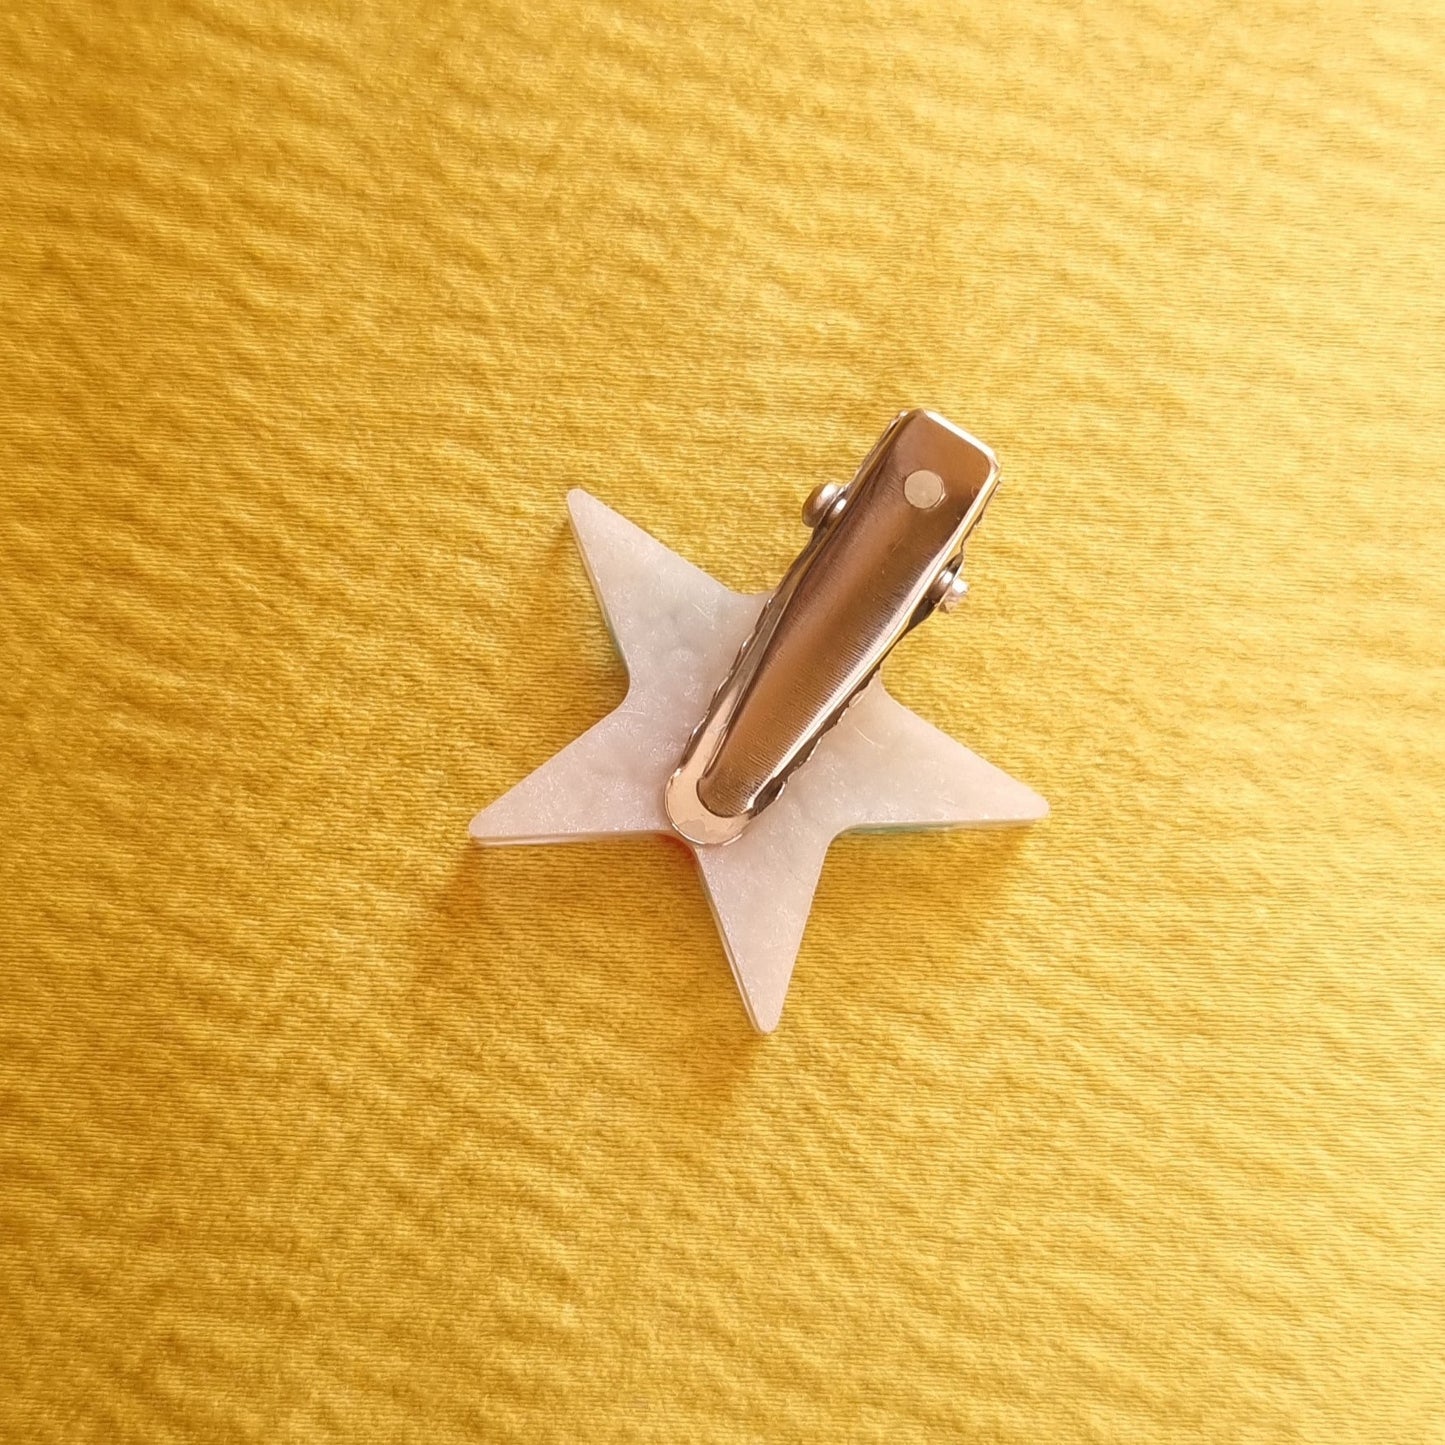 Pearly Cherry Blossom Super Mini Star Resin Hair Clip